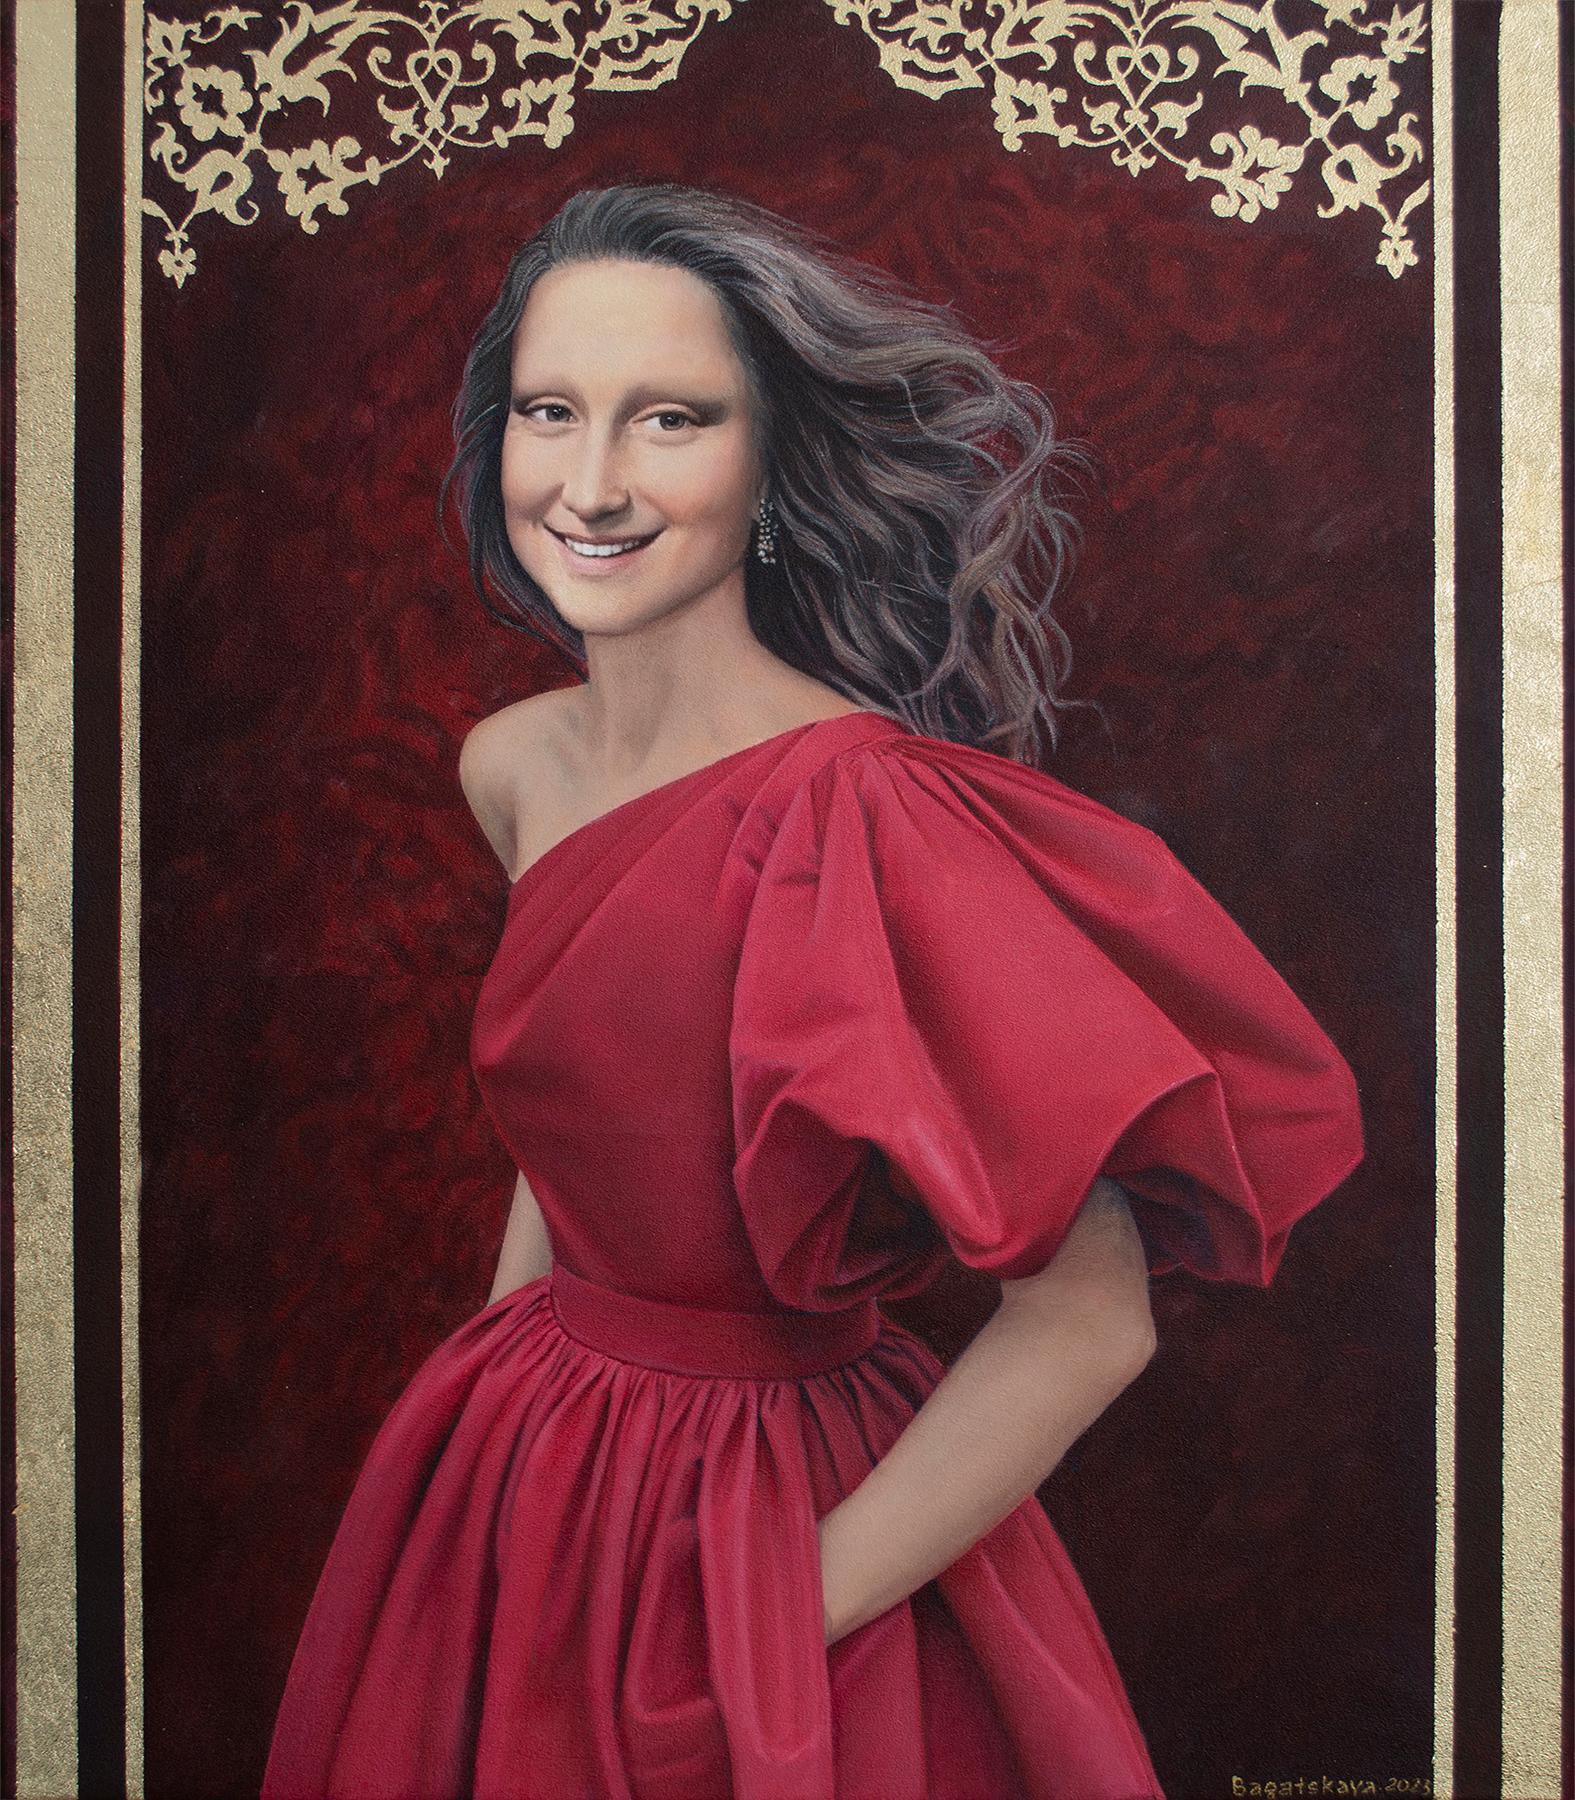 Nataliya Bagatskaya Figurative Painting – Contemporary portrait "Festtagskleid"